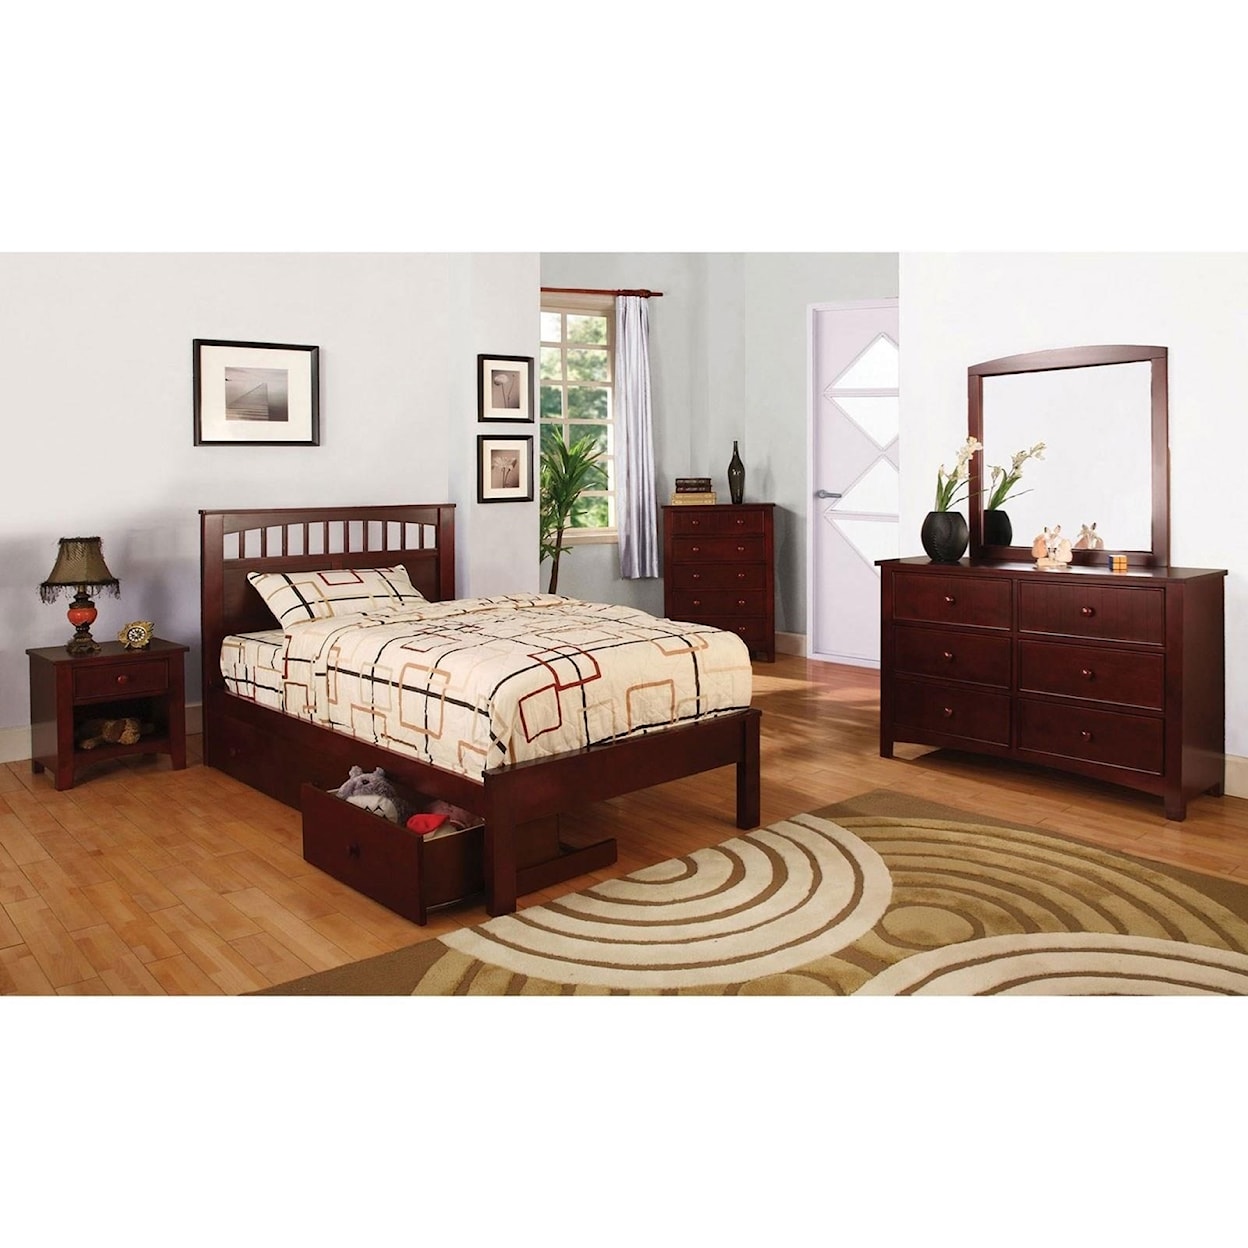 Furniture of America Carus Full Bed